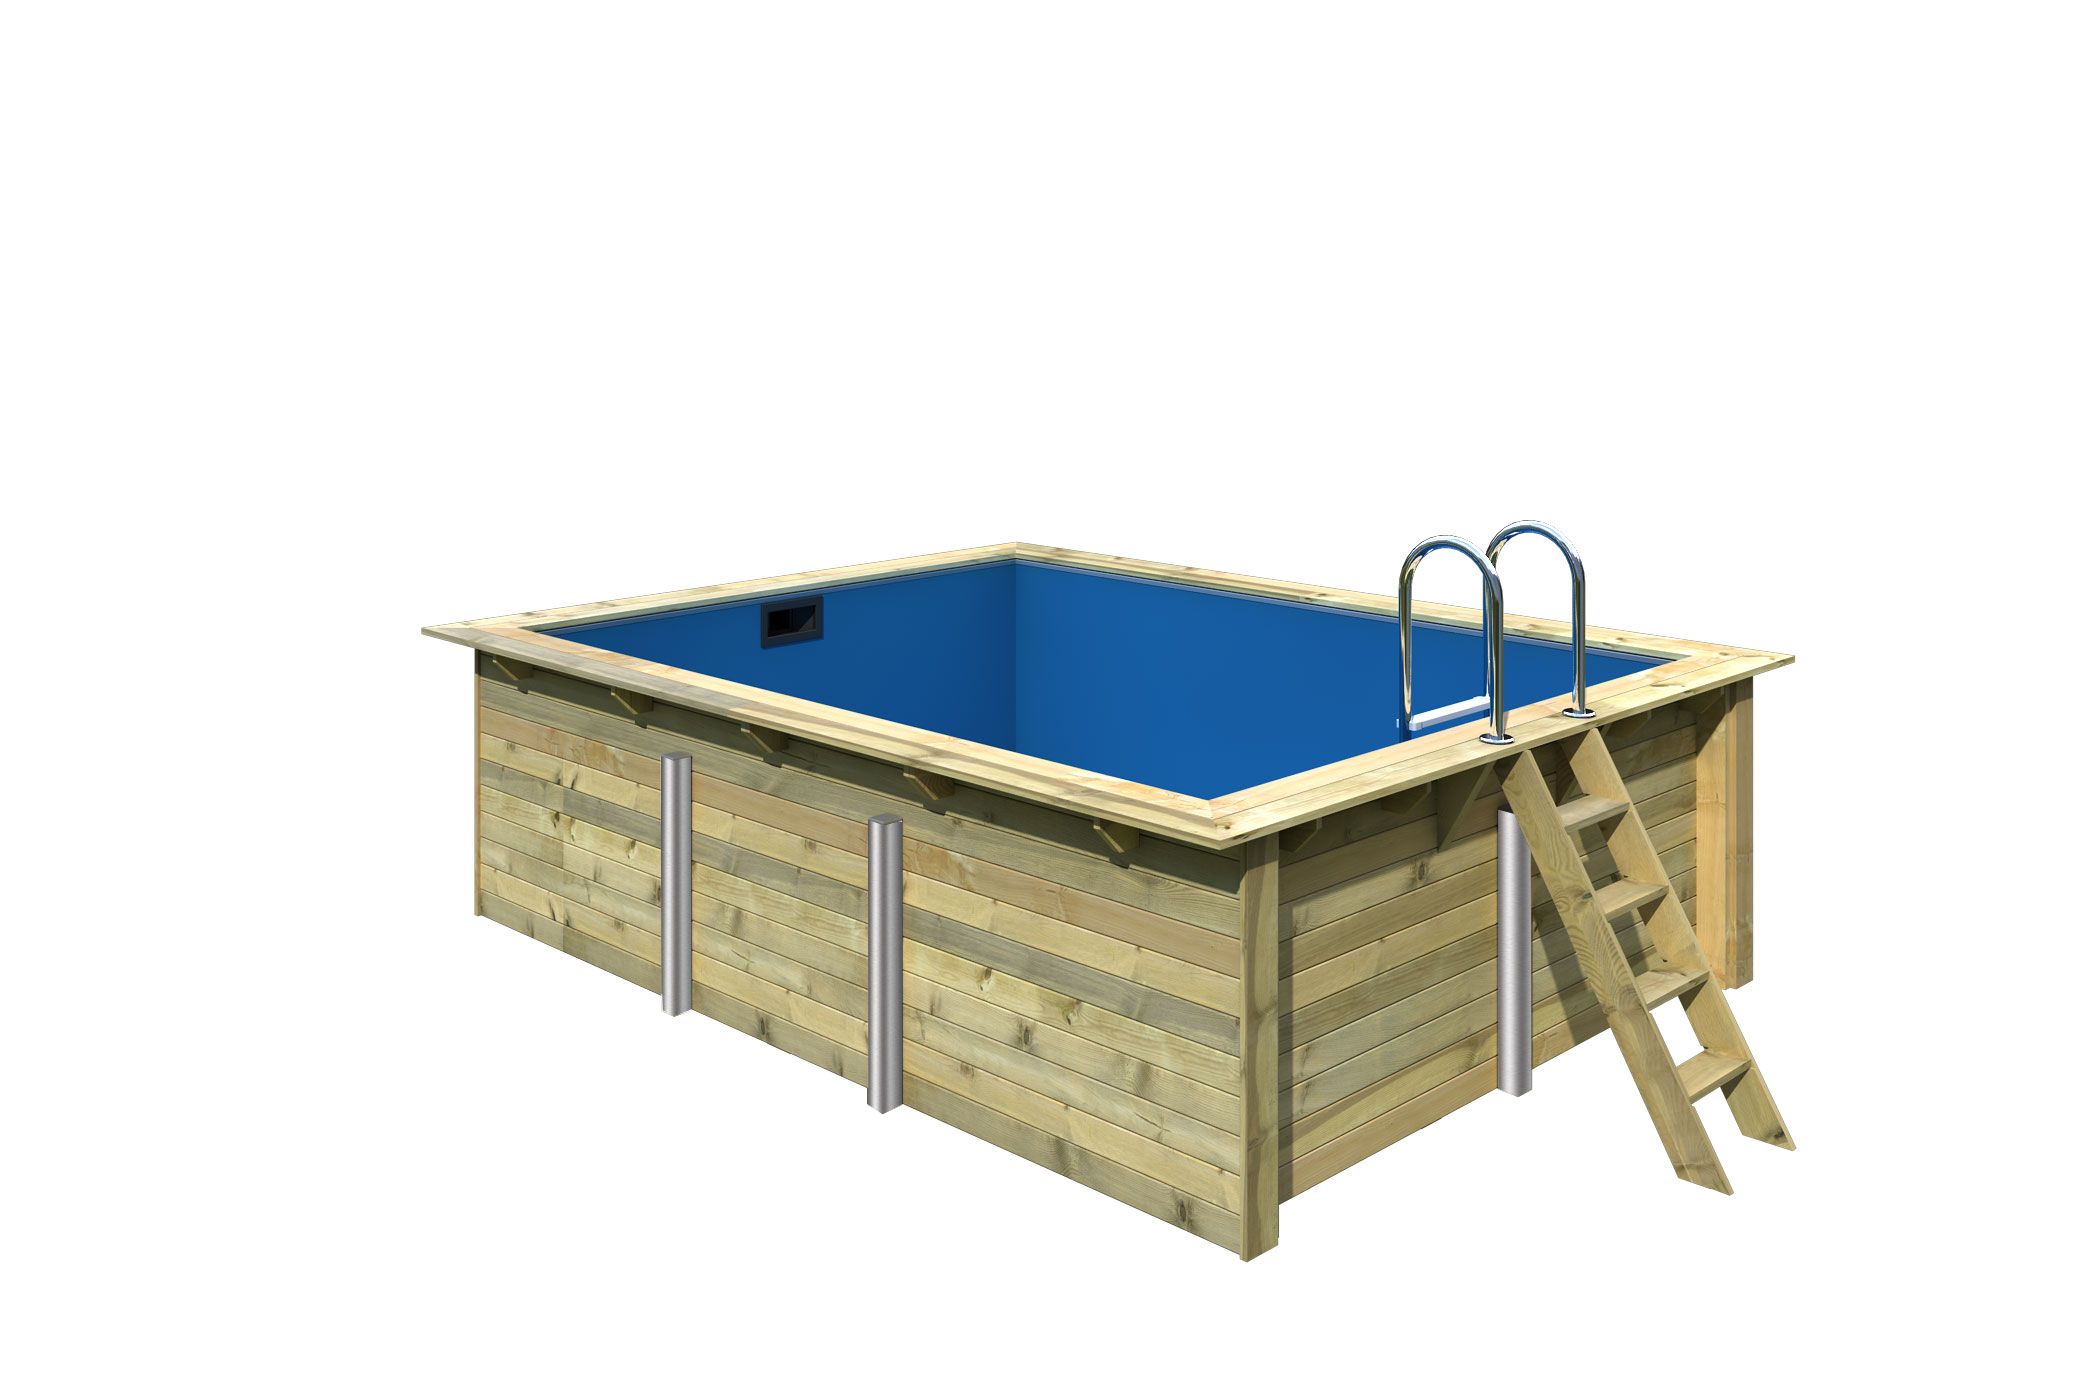 Karibu Rechteck Pool Gr. 2 - 350 x 440 cm - kesseldruckimprägniert Sparset mit Filteranlage -inkl. gratis Pool-Pflegeset